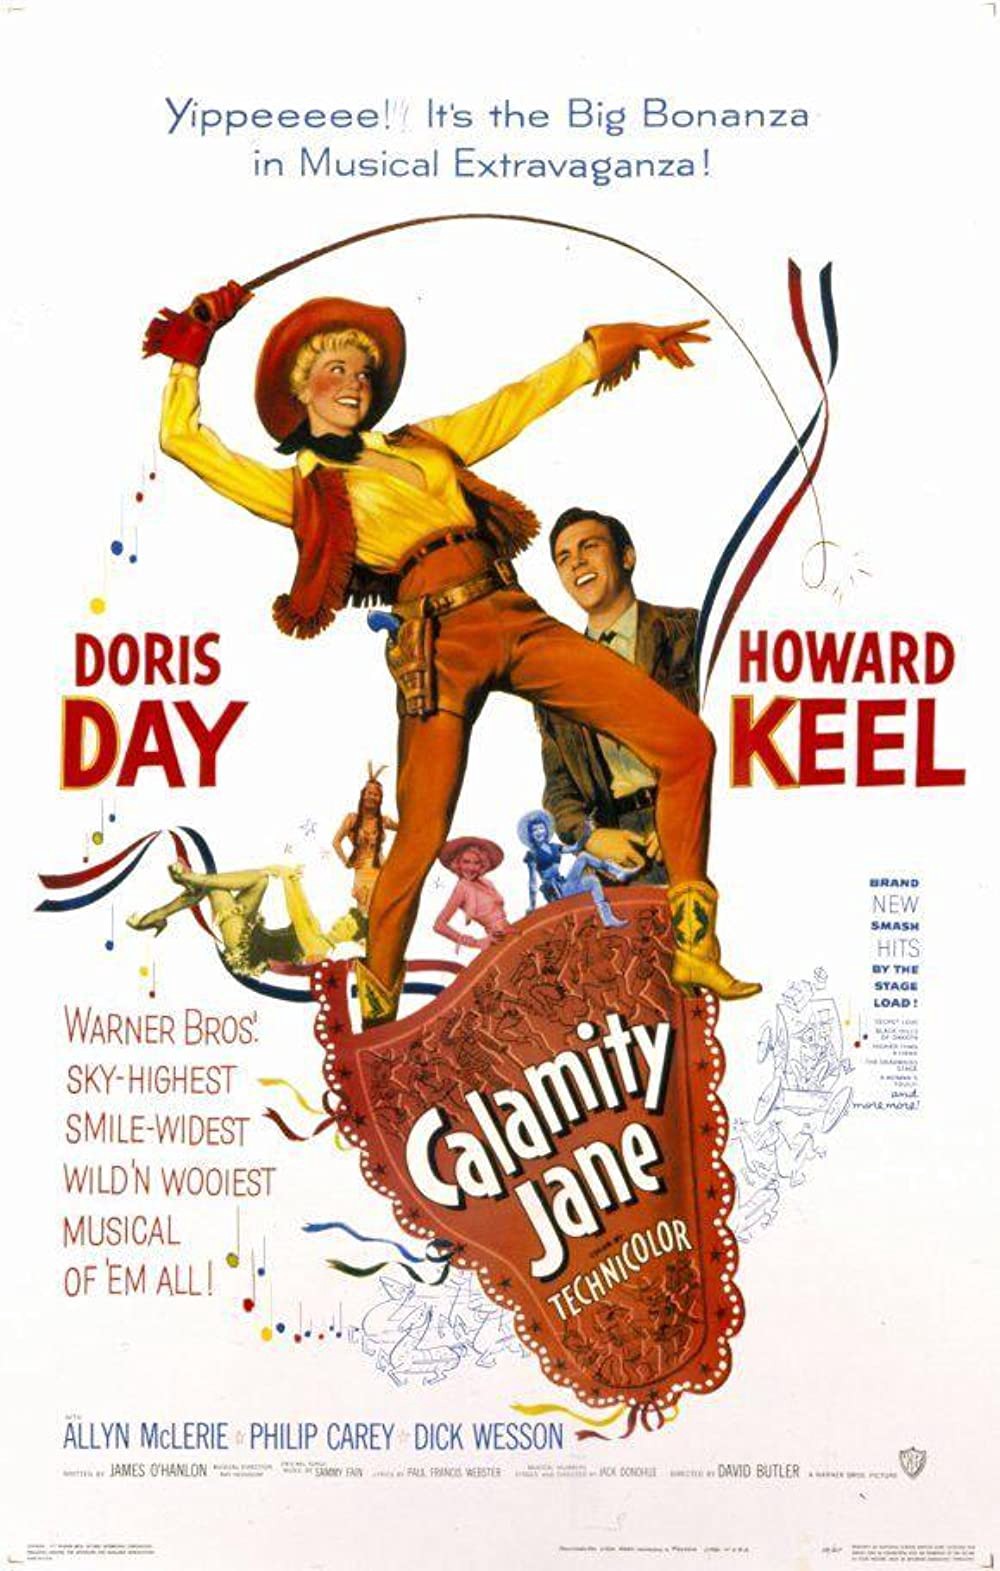 Calamity Jane (film) Warner Bros image image